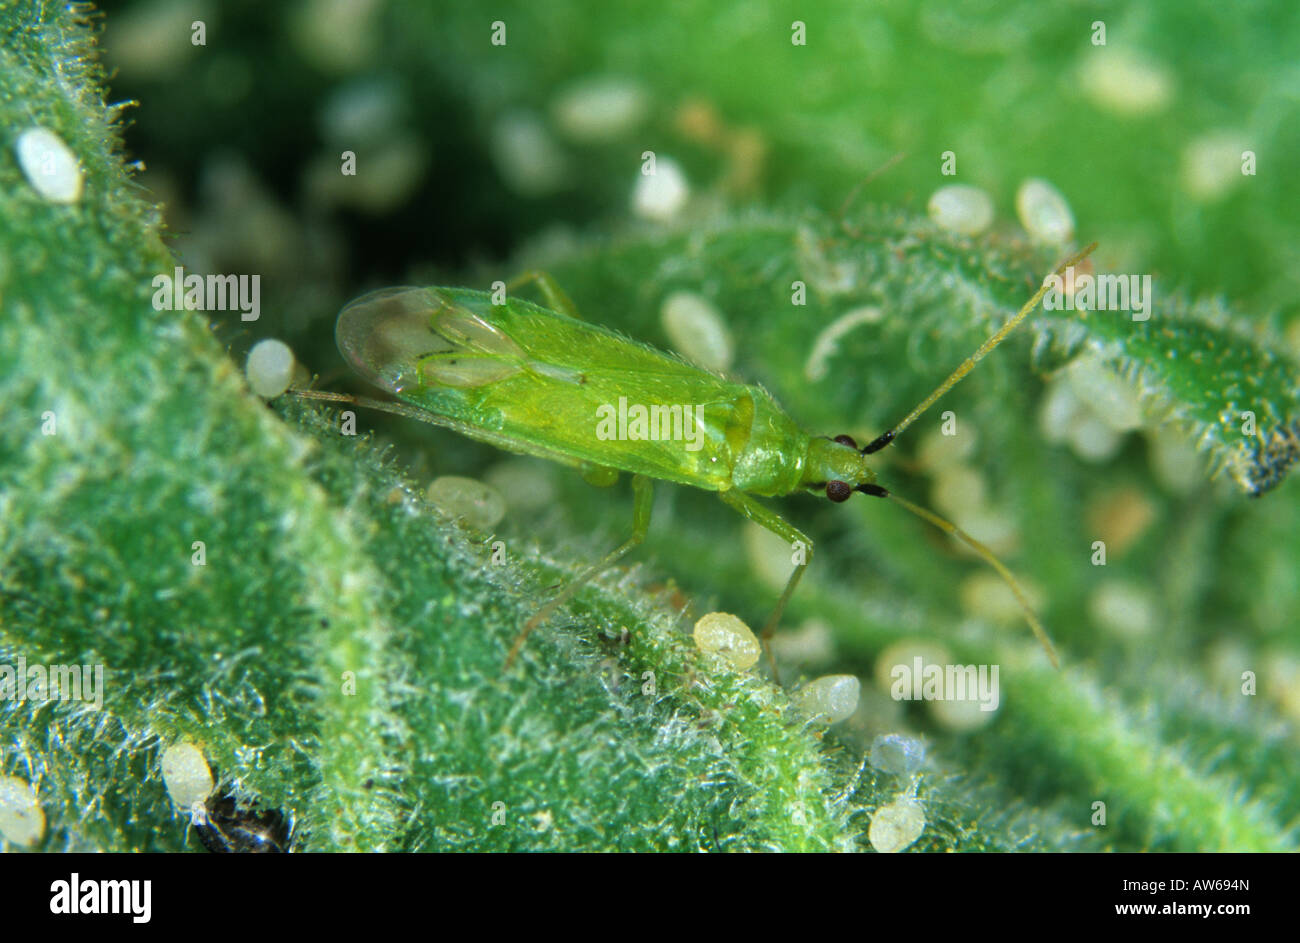 Predatory mirid bug Macrolophus pygmaeus adult a commercial predator of whitefly Stock Photo